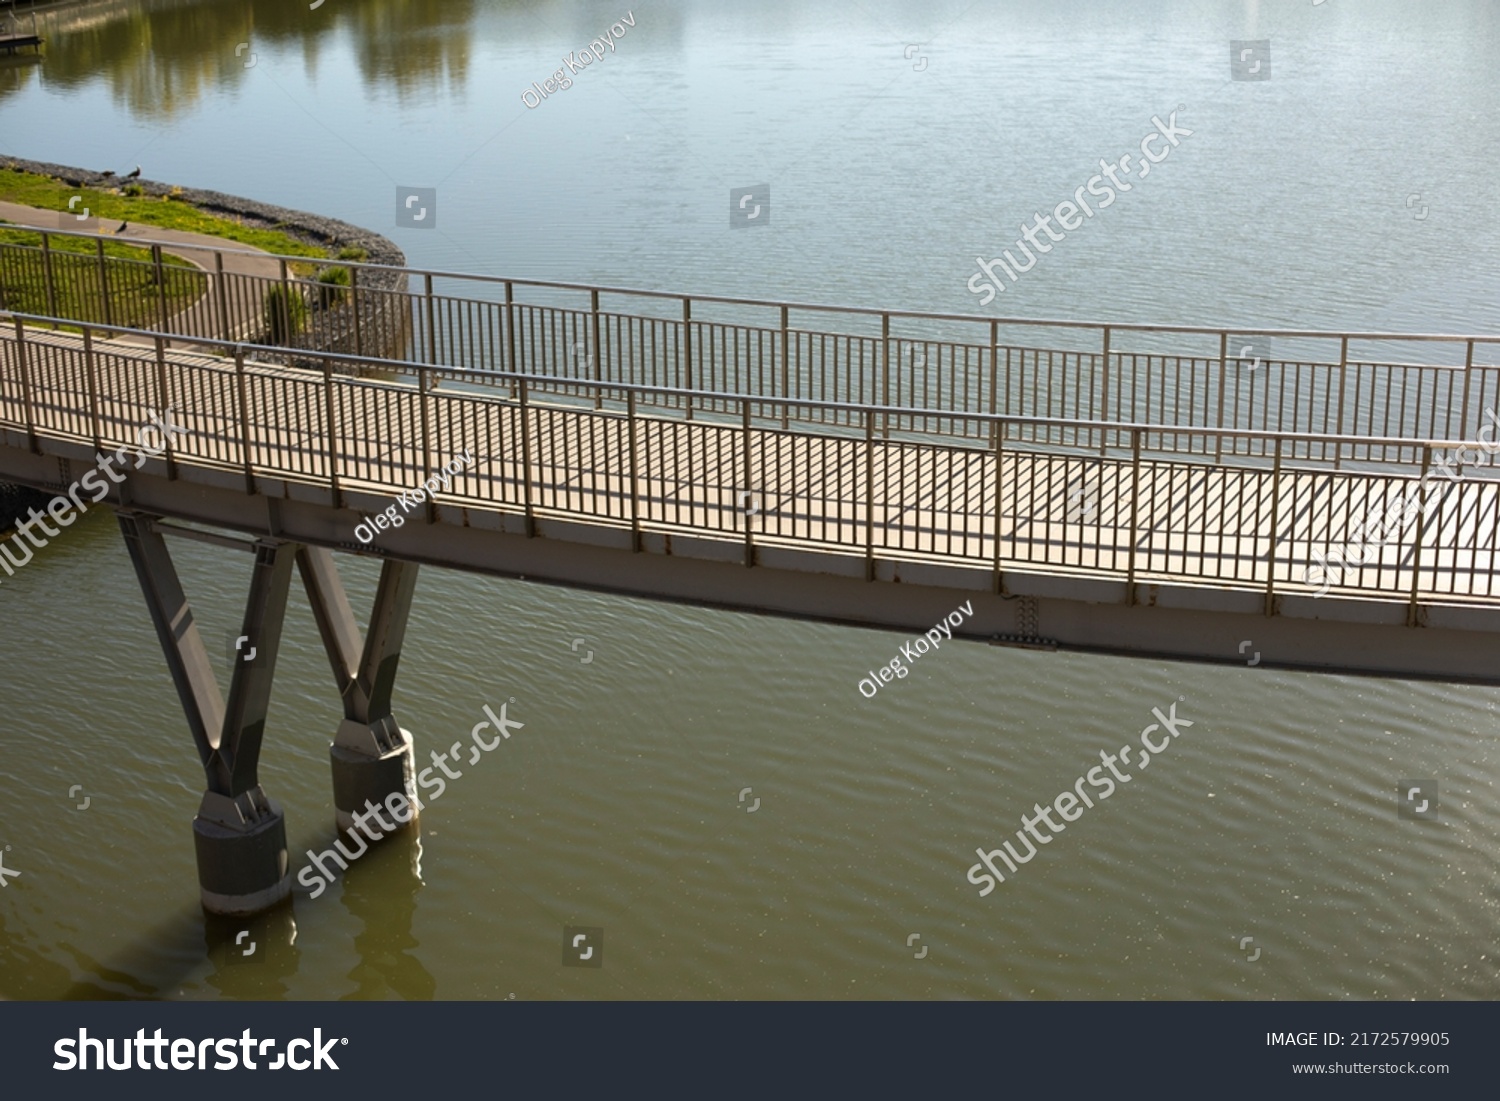 Pedestrian bridge on water. Bridge with railings. Details of park in city. Embankment on lake. #2172579905